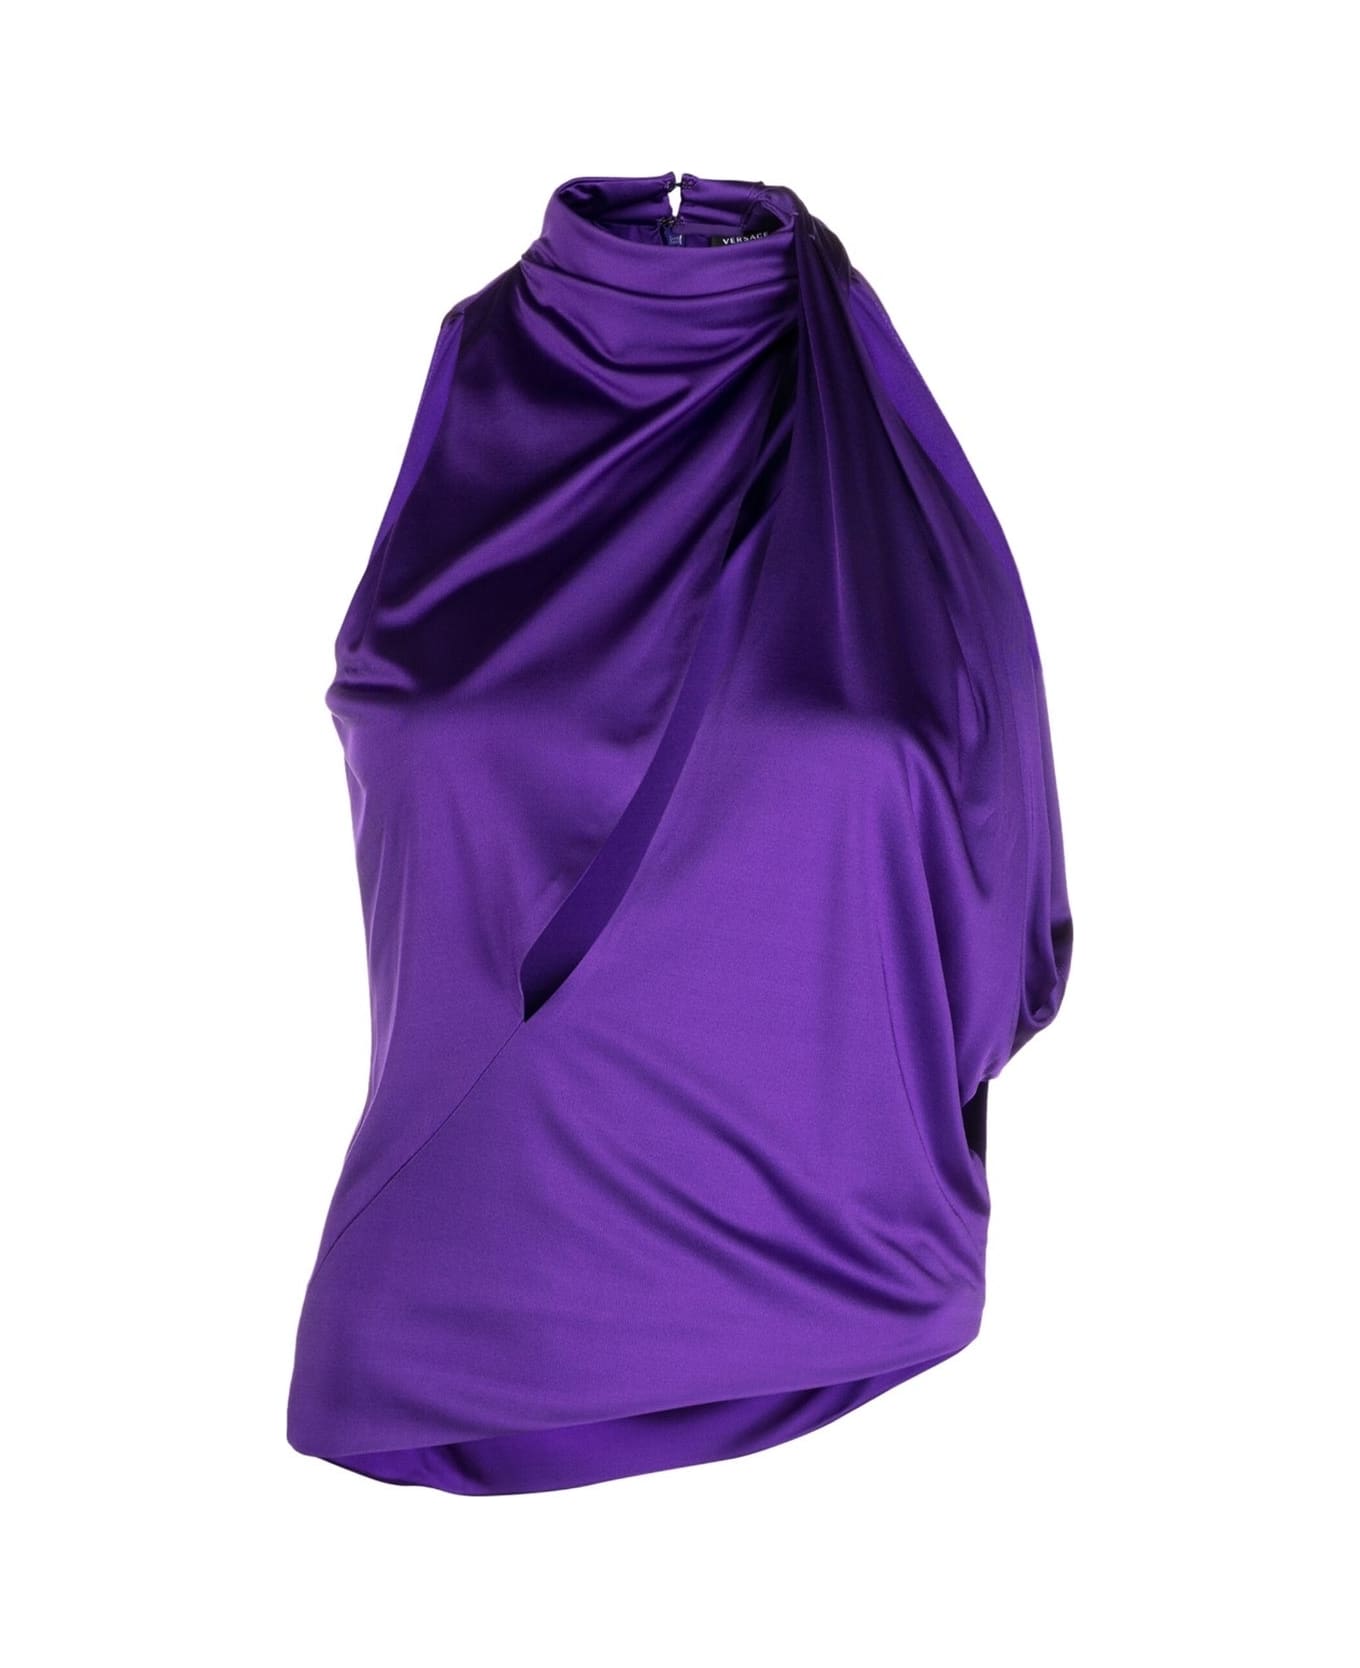 Versace Draped Top - Purple